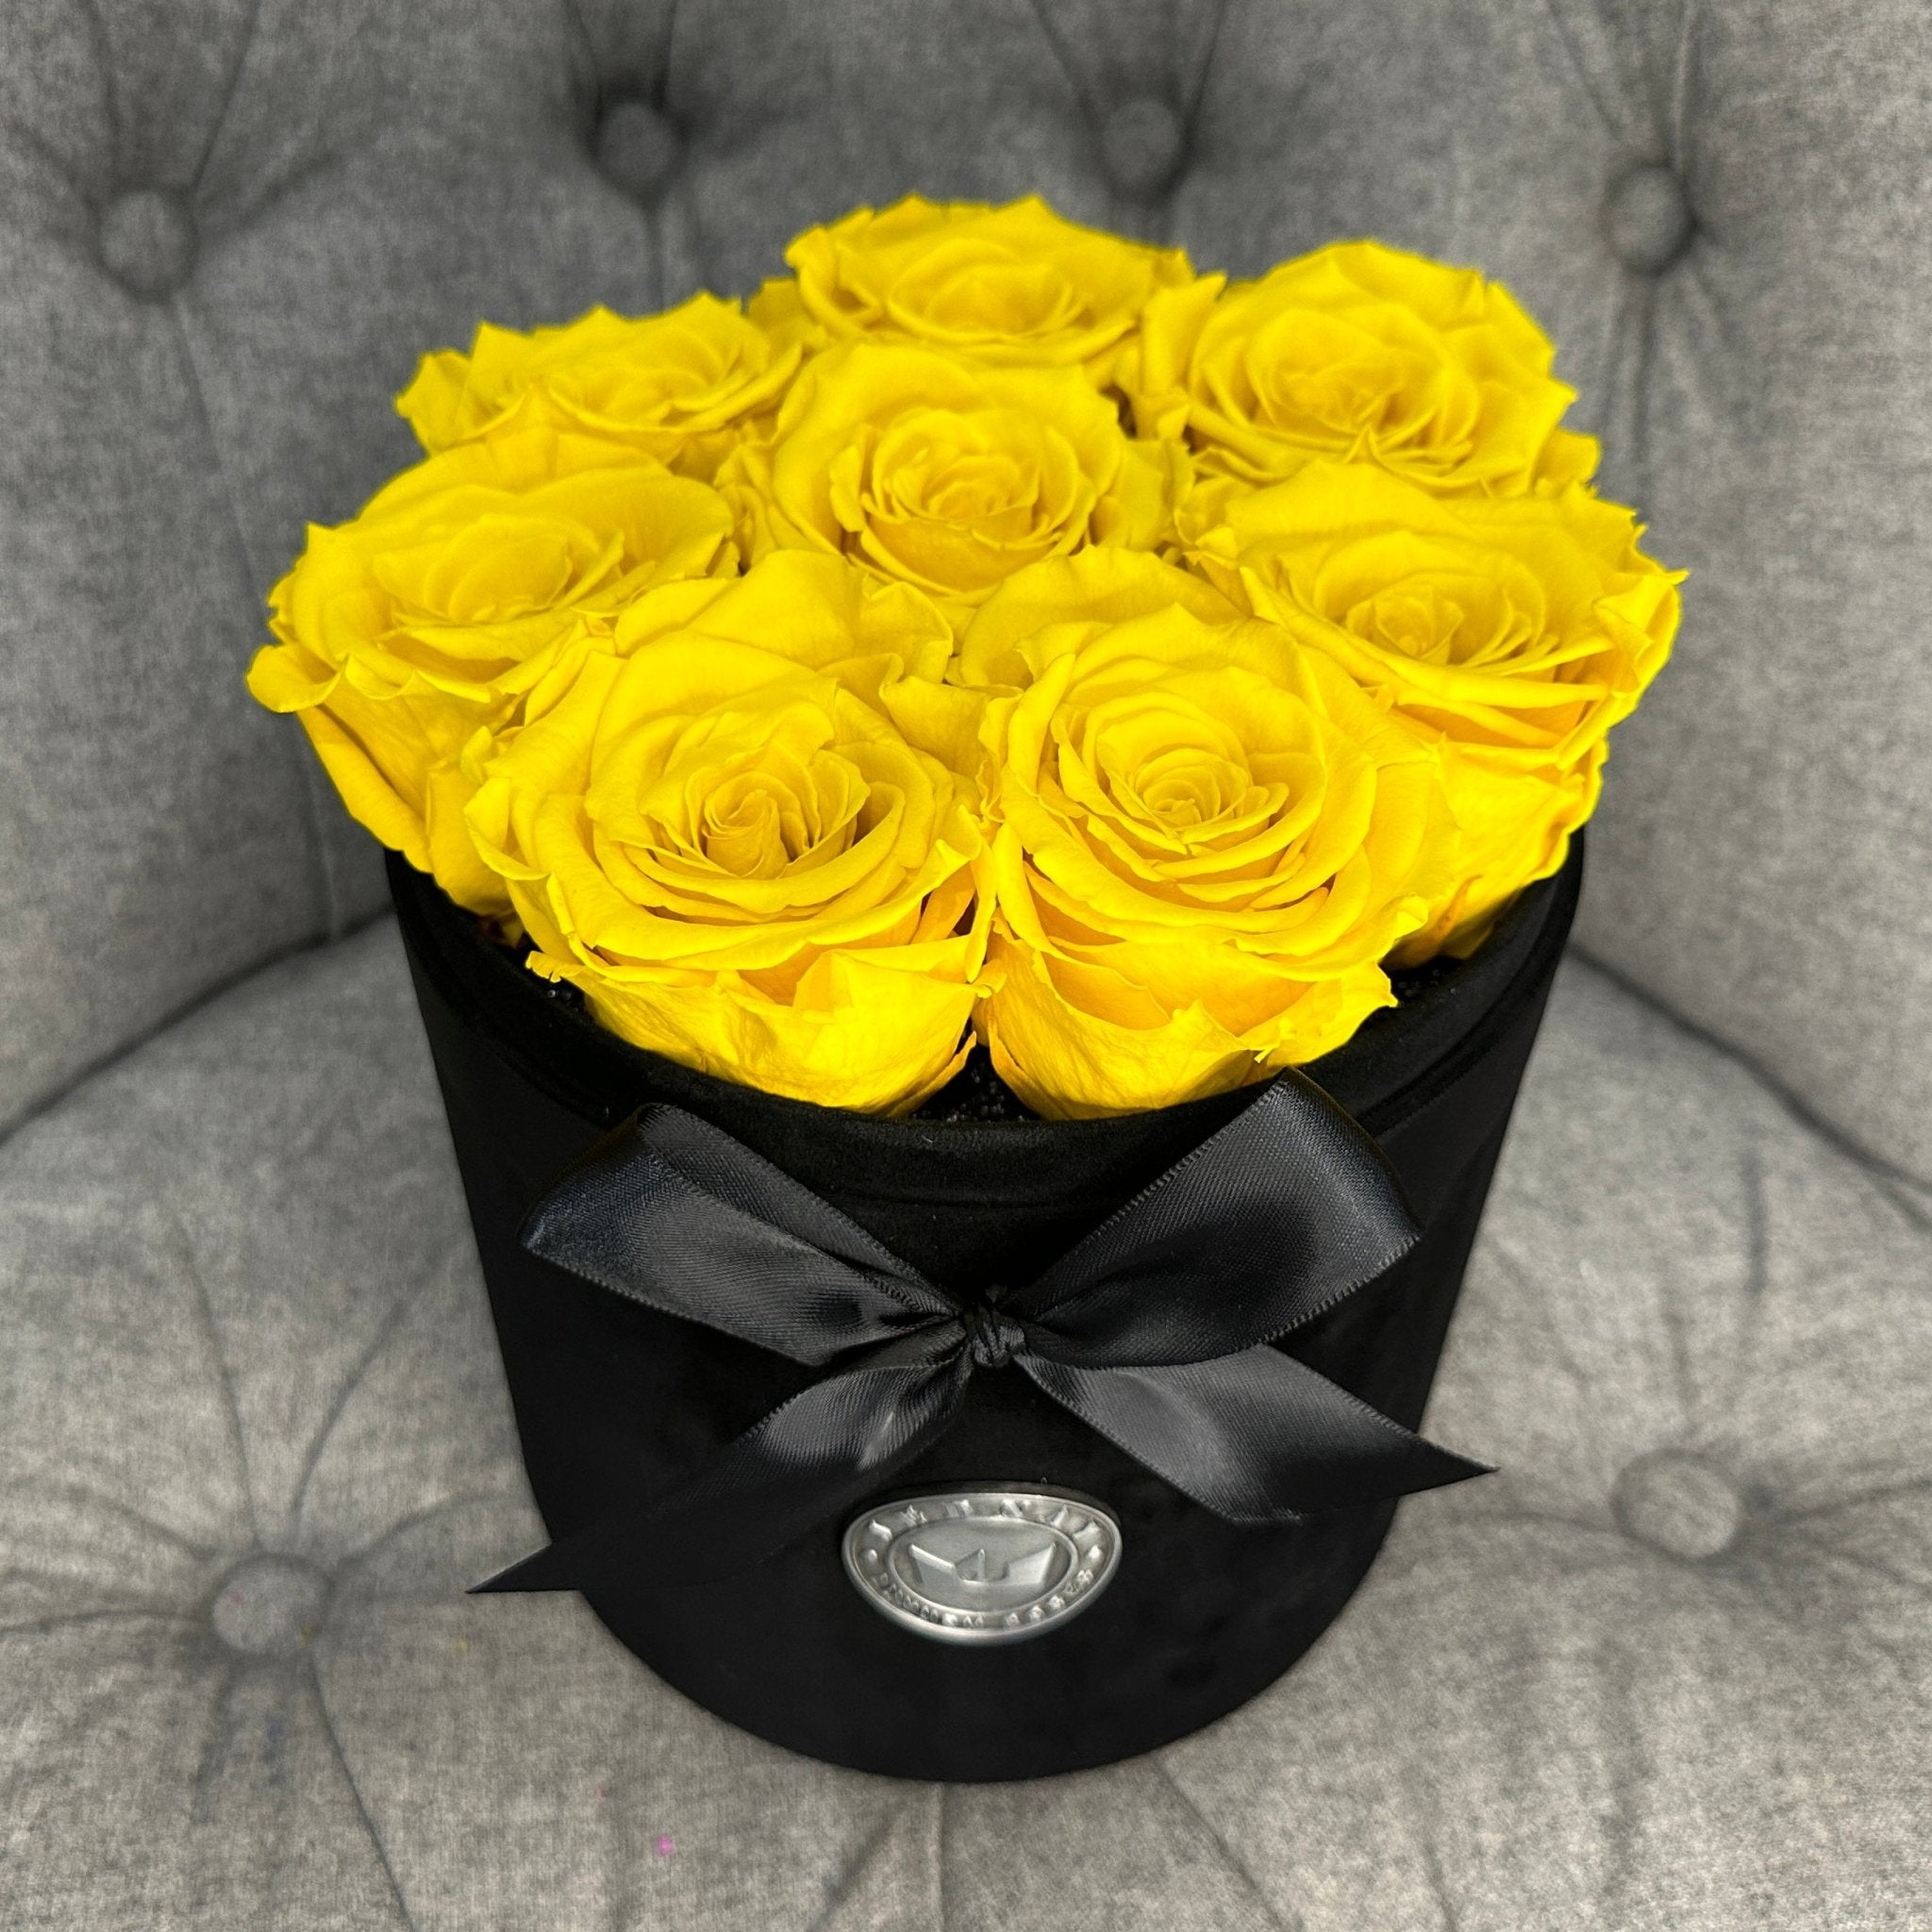 Medium Black Suede Forever Rose Box - Sunshine Yellow Eternal Roses - Jednay Roses